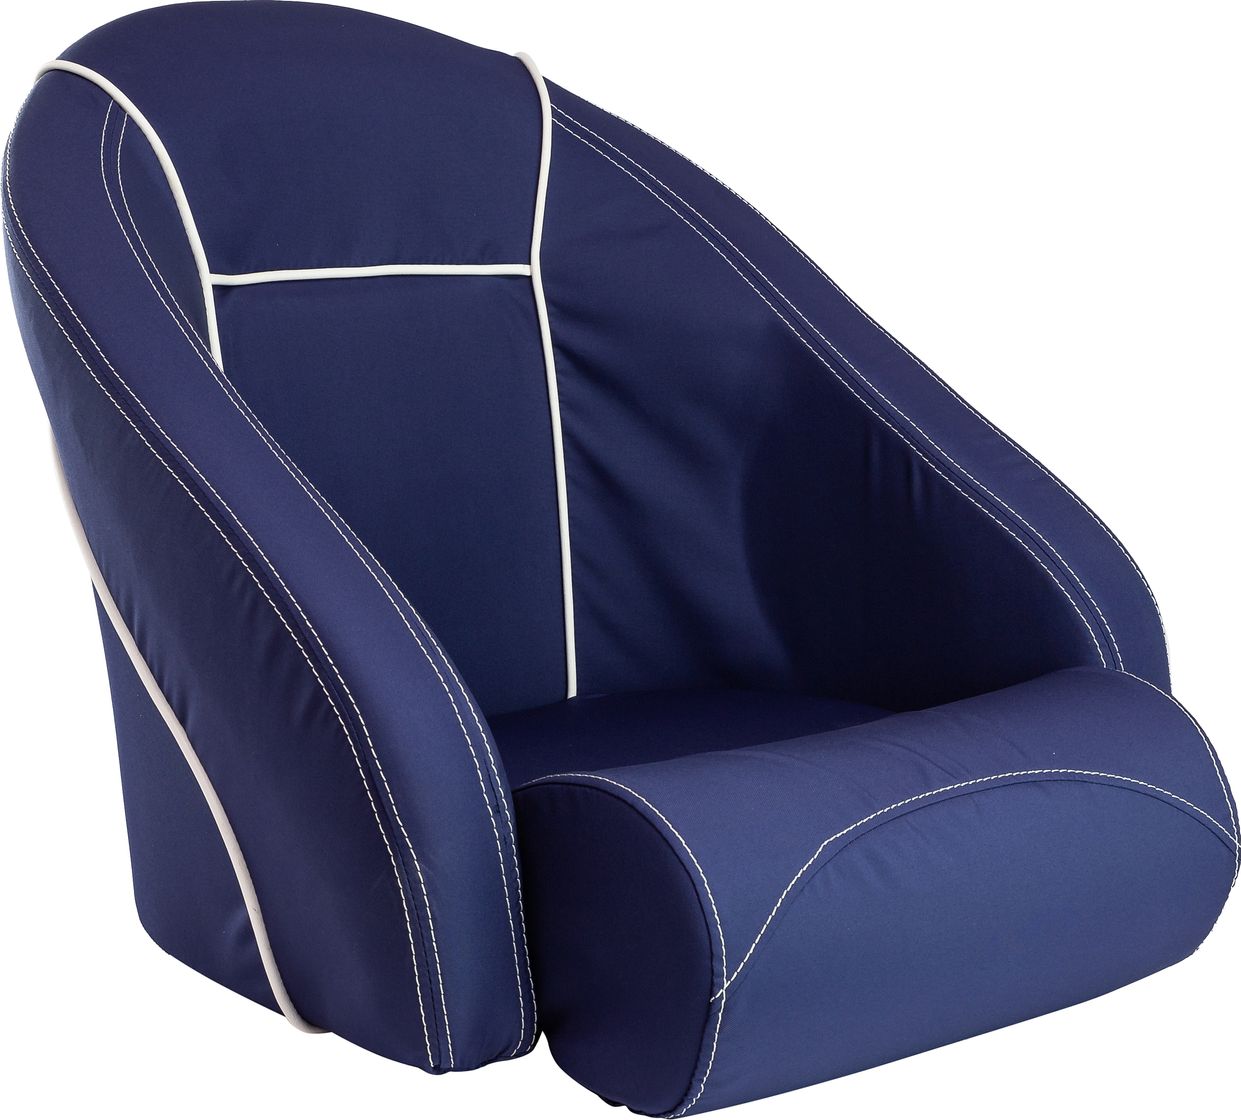 Кресло ROMEO мягкое, подставка, обивка ткань Markilux темно-синяя 118100395 кресло складное мягкое traveler обивка камуфляжная ткань duck blind 1061108c